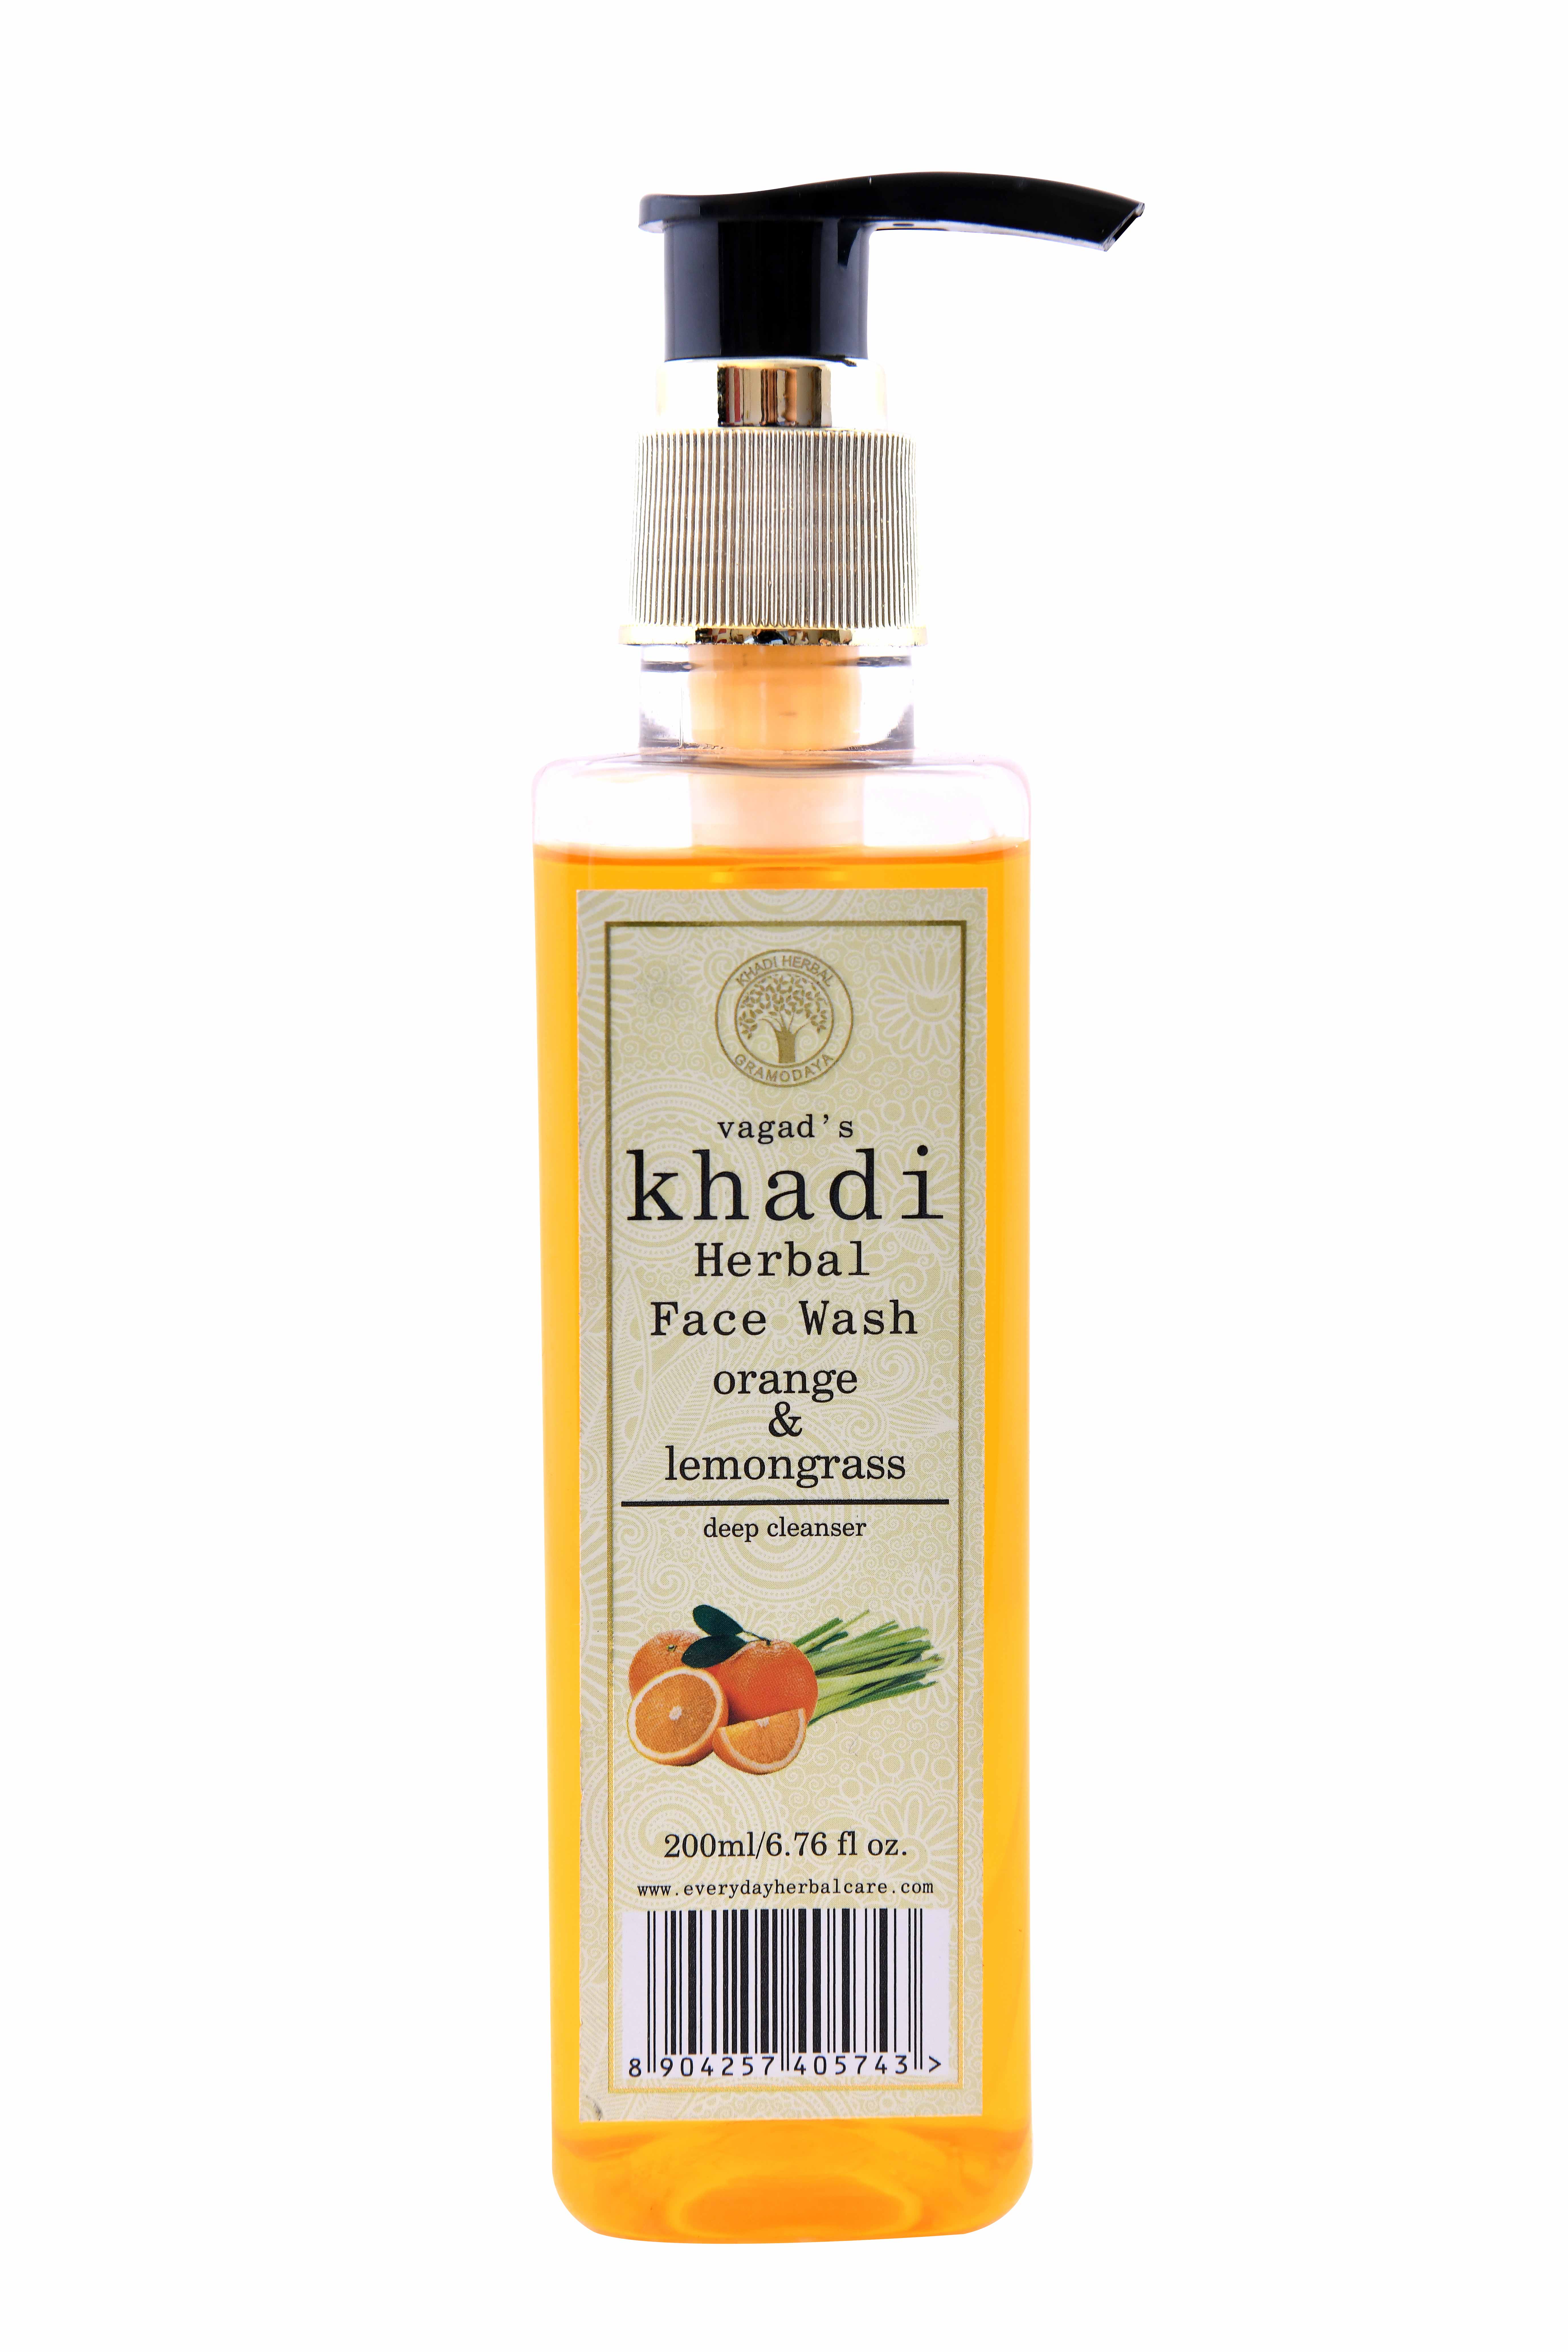 Buy Vagad's Khadi Orange And Lemongrass Face Wash at Best Price Online